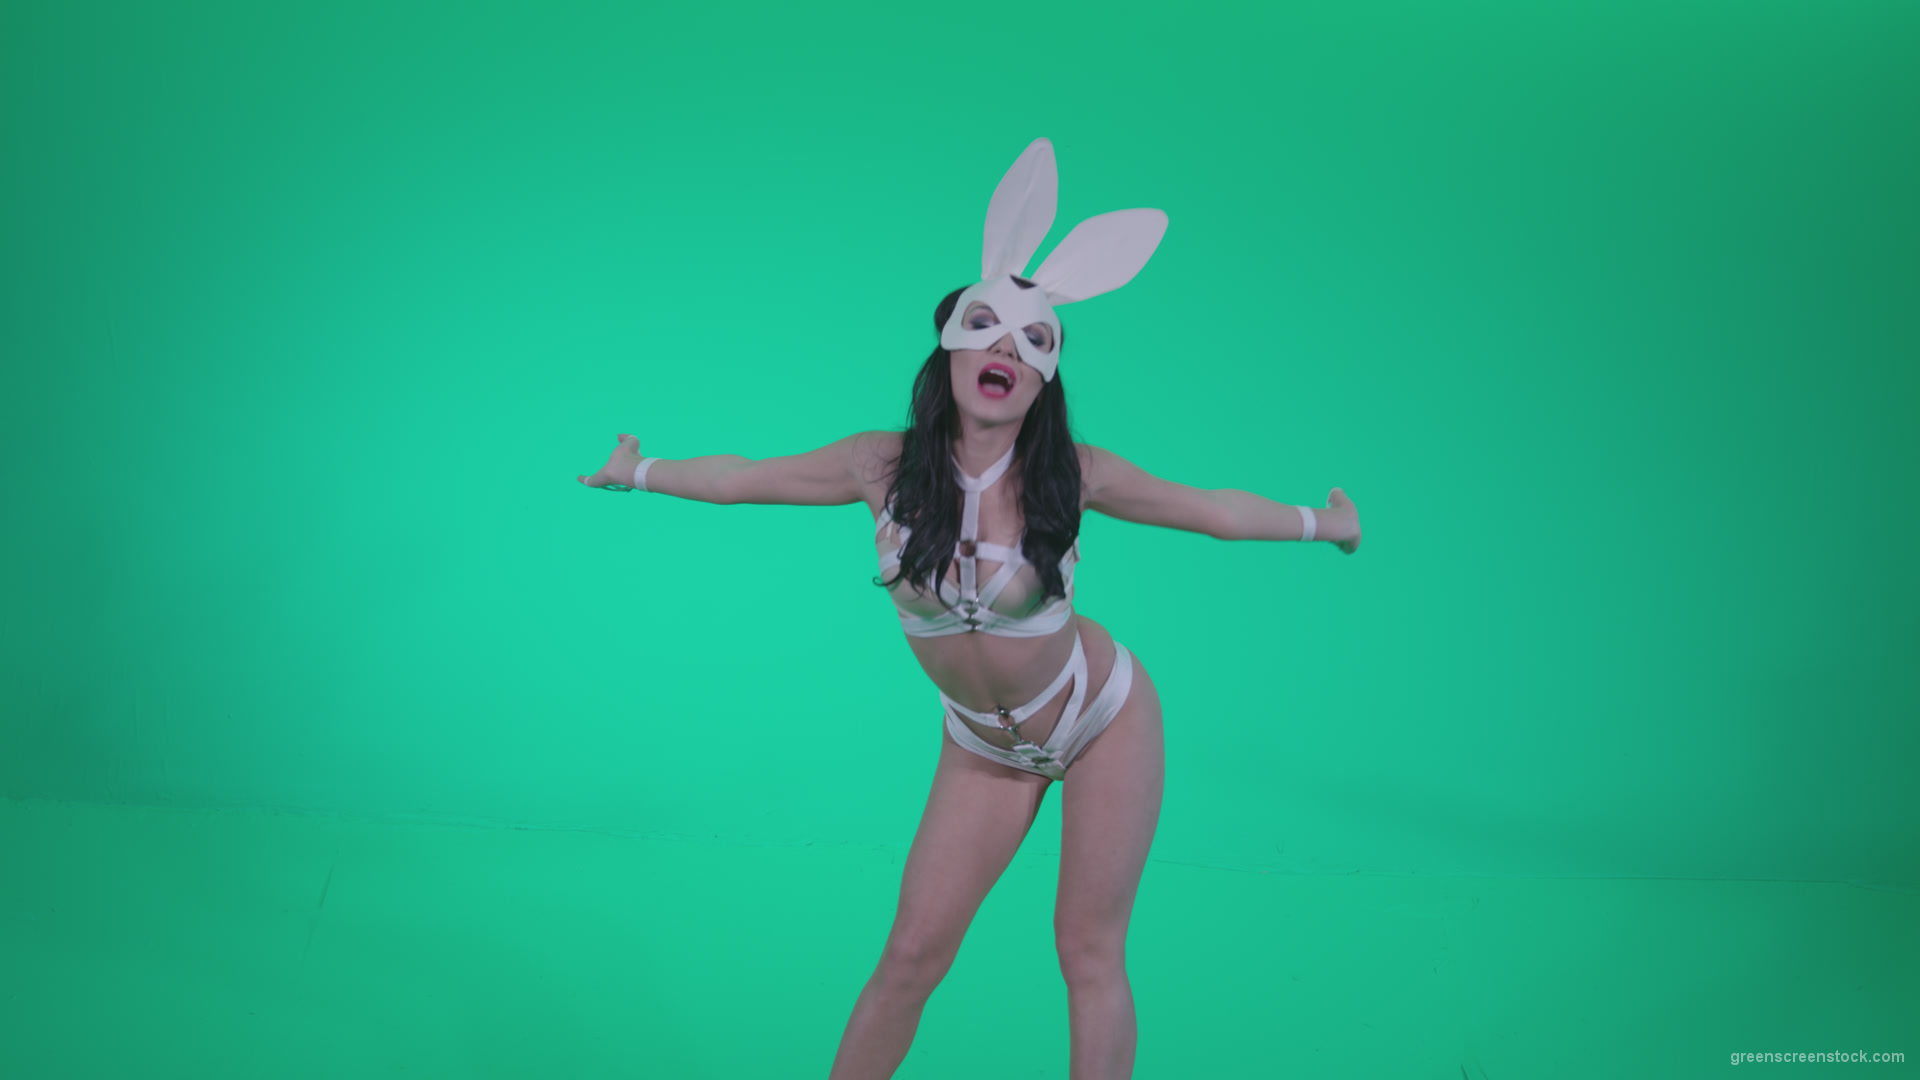 Go-go-Dancer-White-Rabbit-m11-Green-Screen-Video-Footage_009 Green Screen Stock